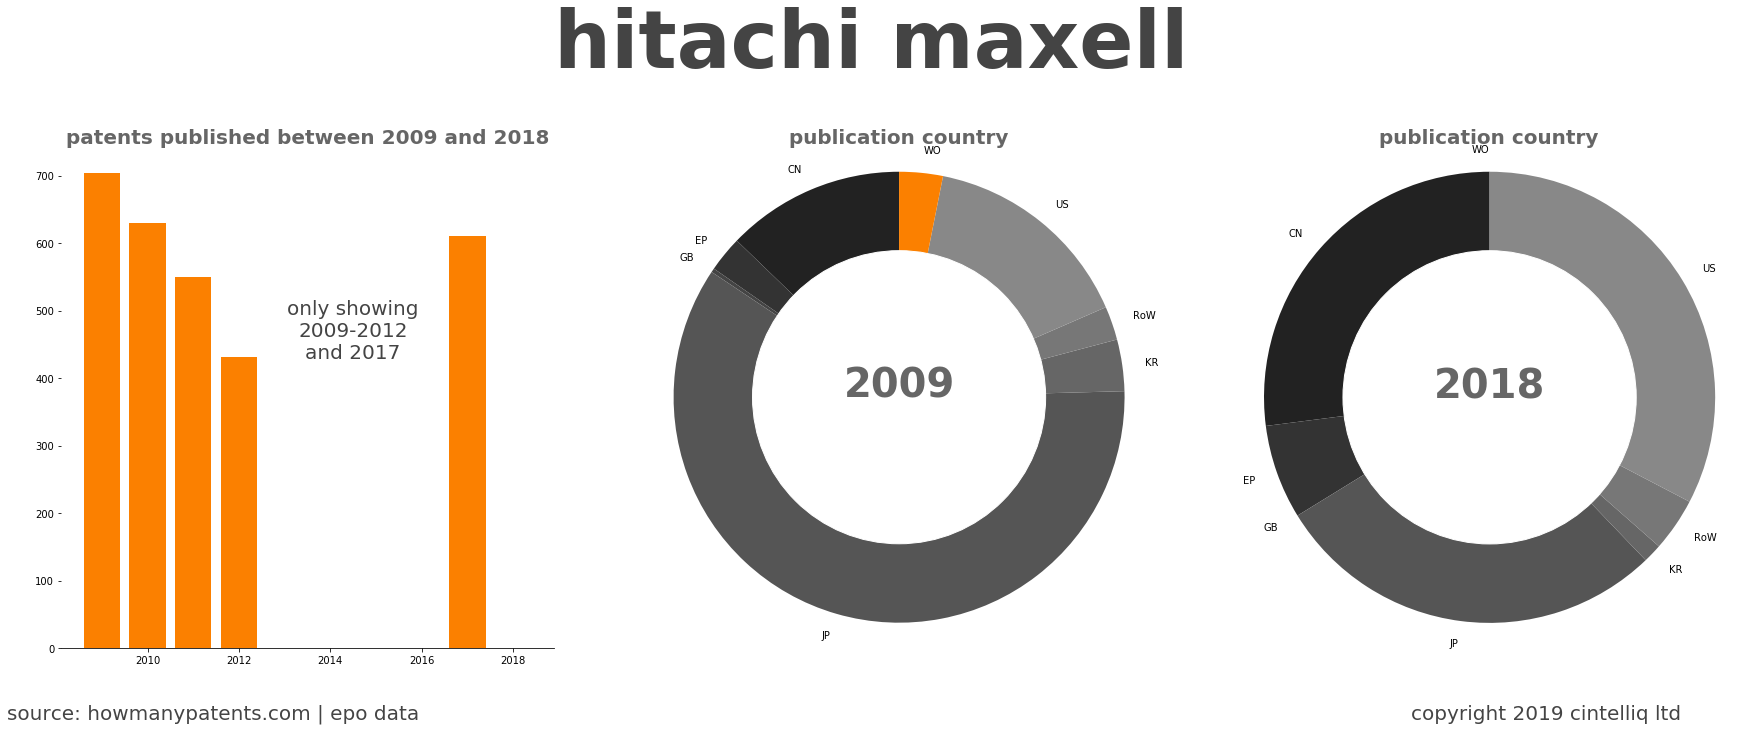 summary of patents for Hitachi Maxell